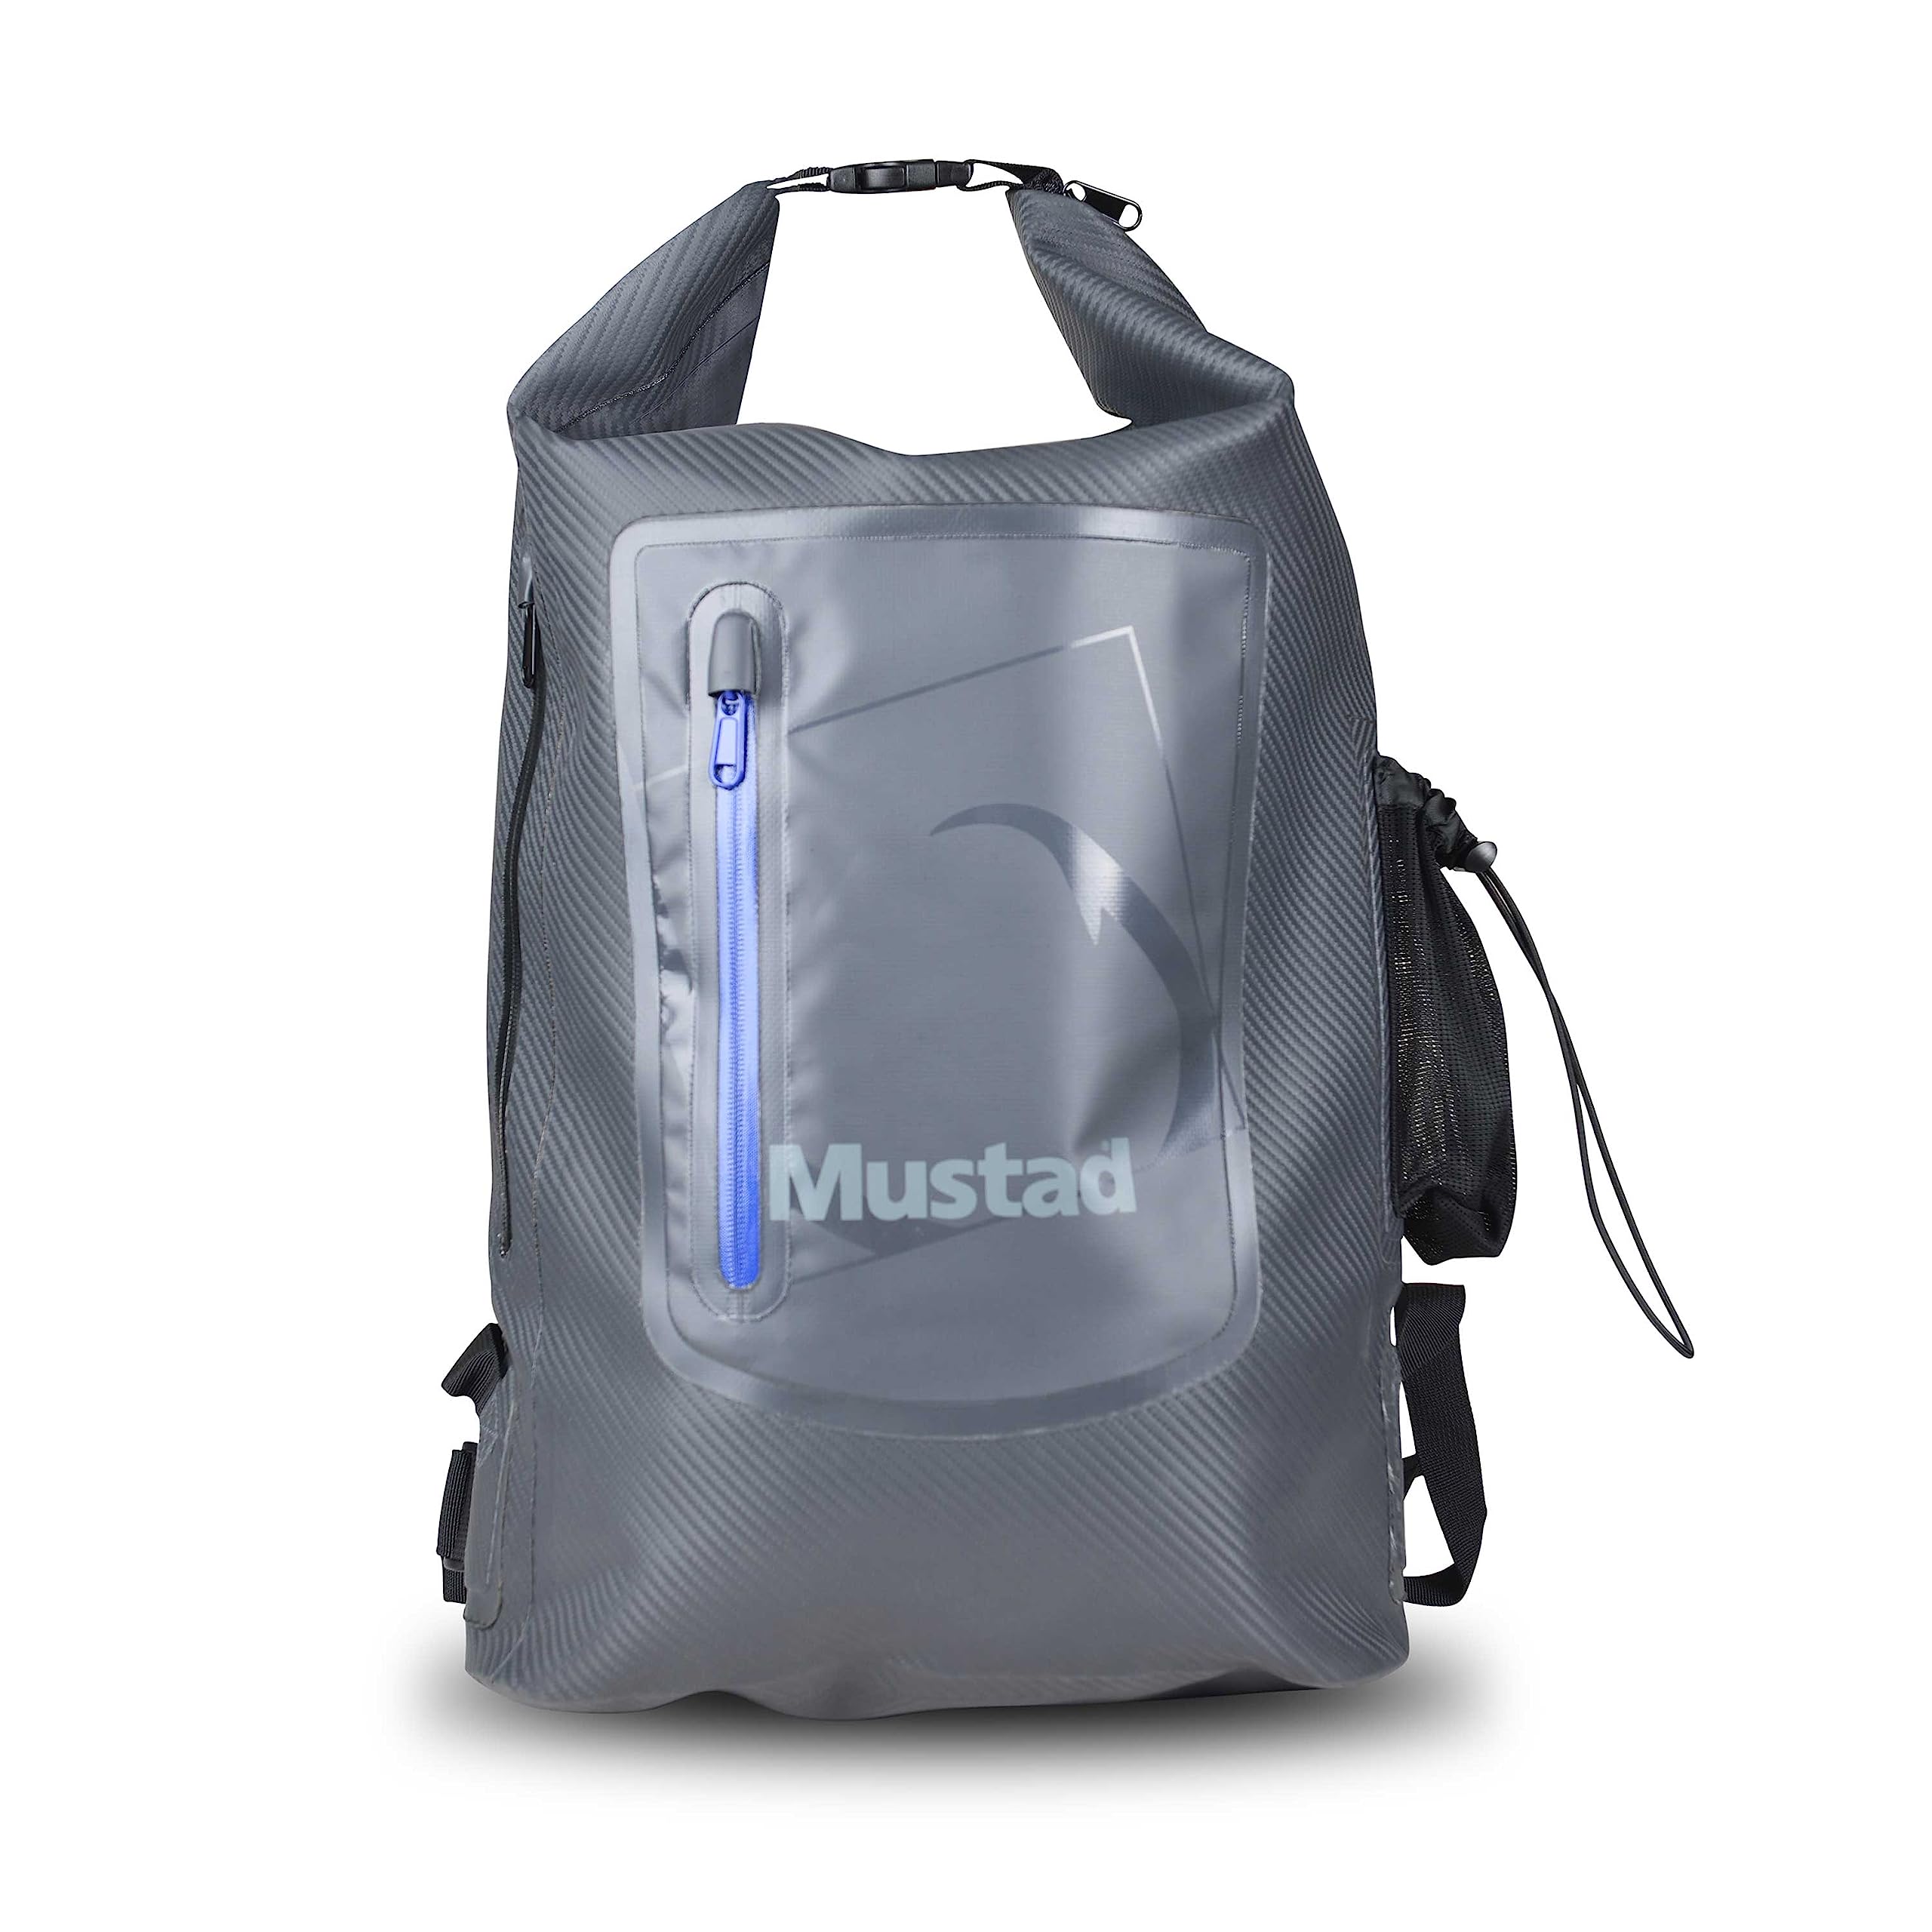 Mustad MB010 Angeln Dry Rucksack, 30 Liter, Grau/Blau, 30 L